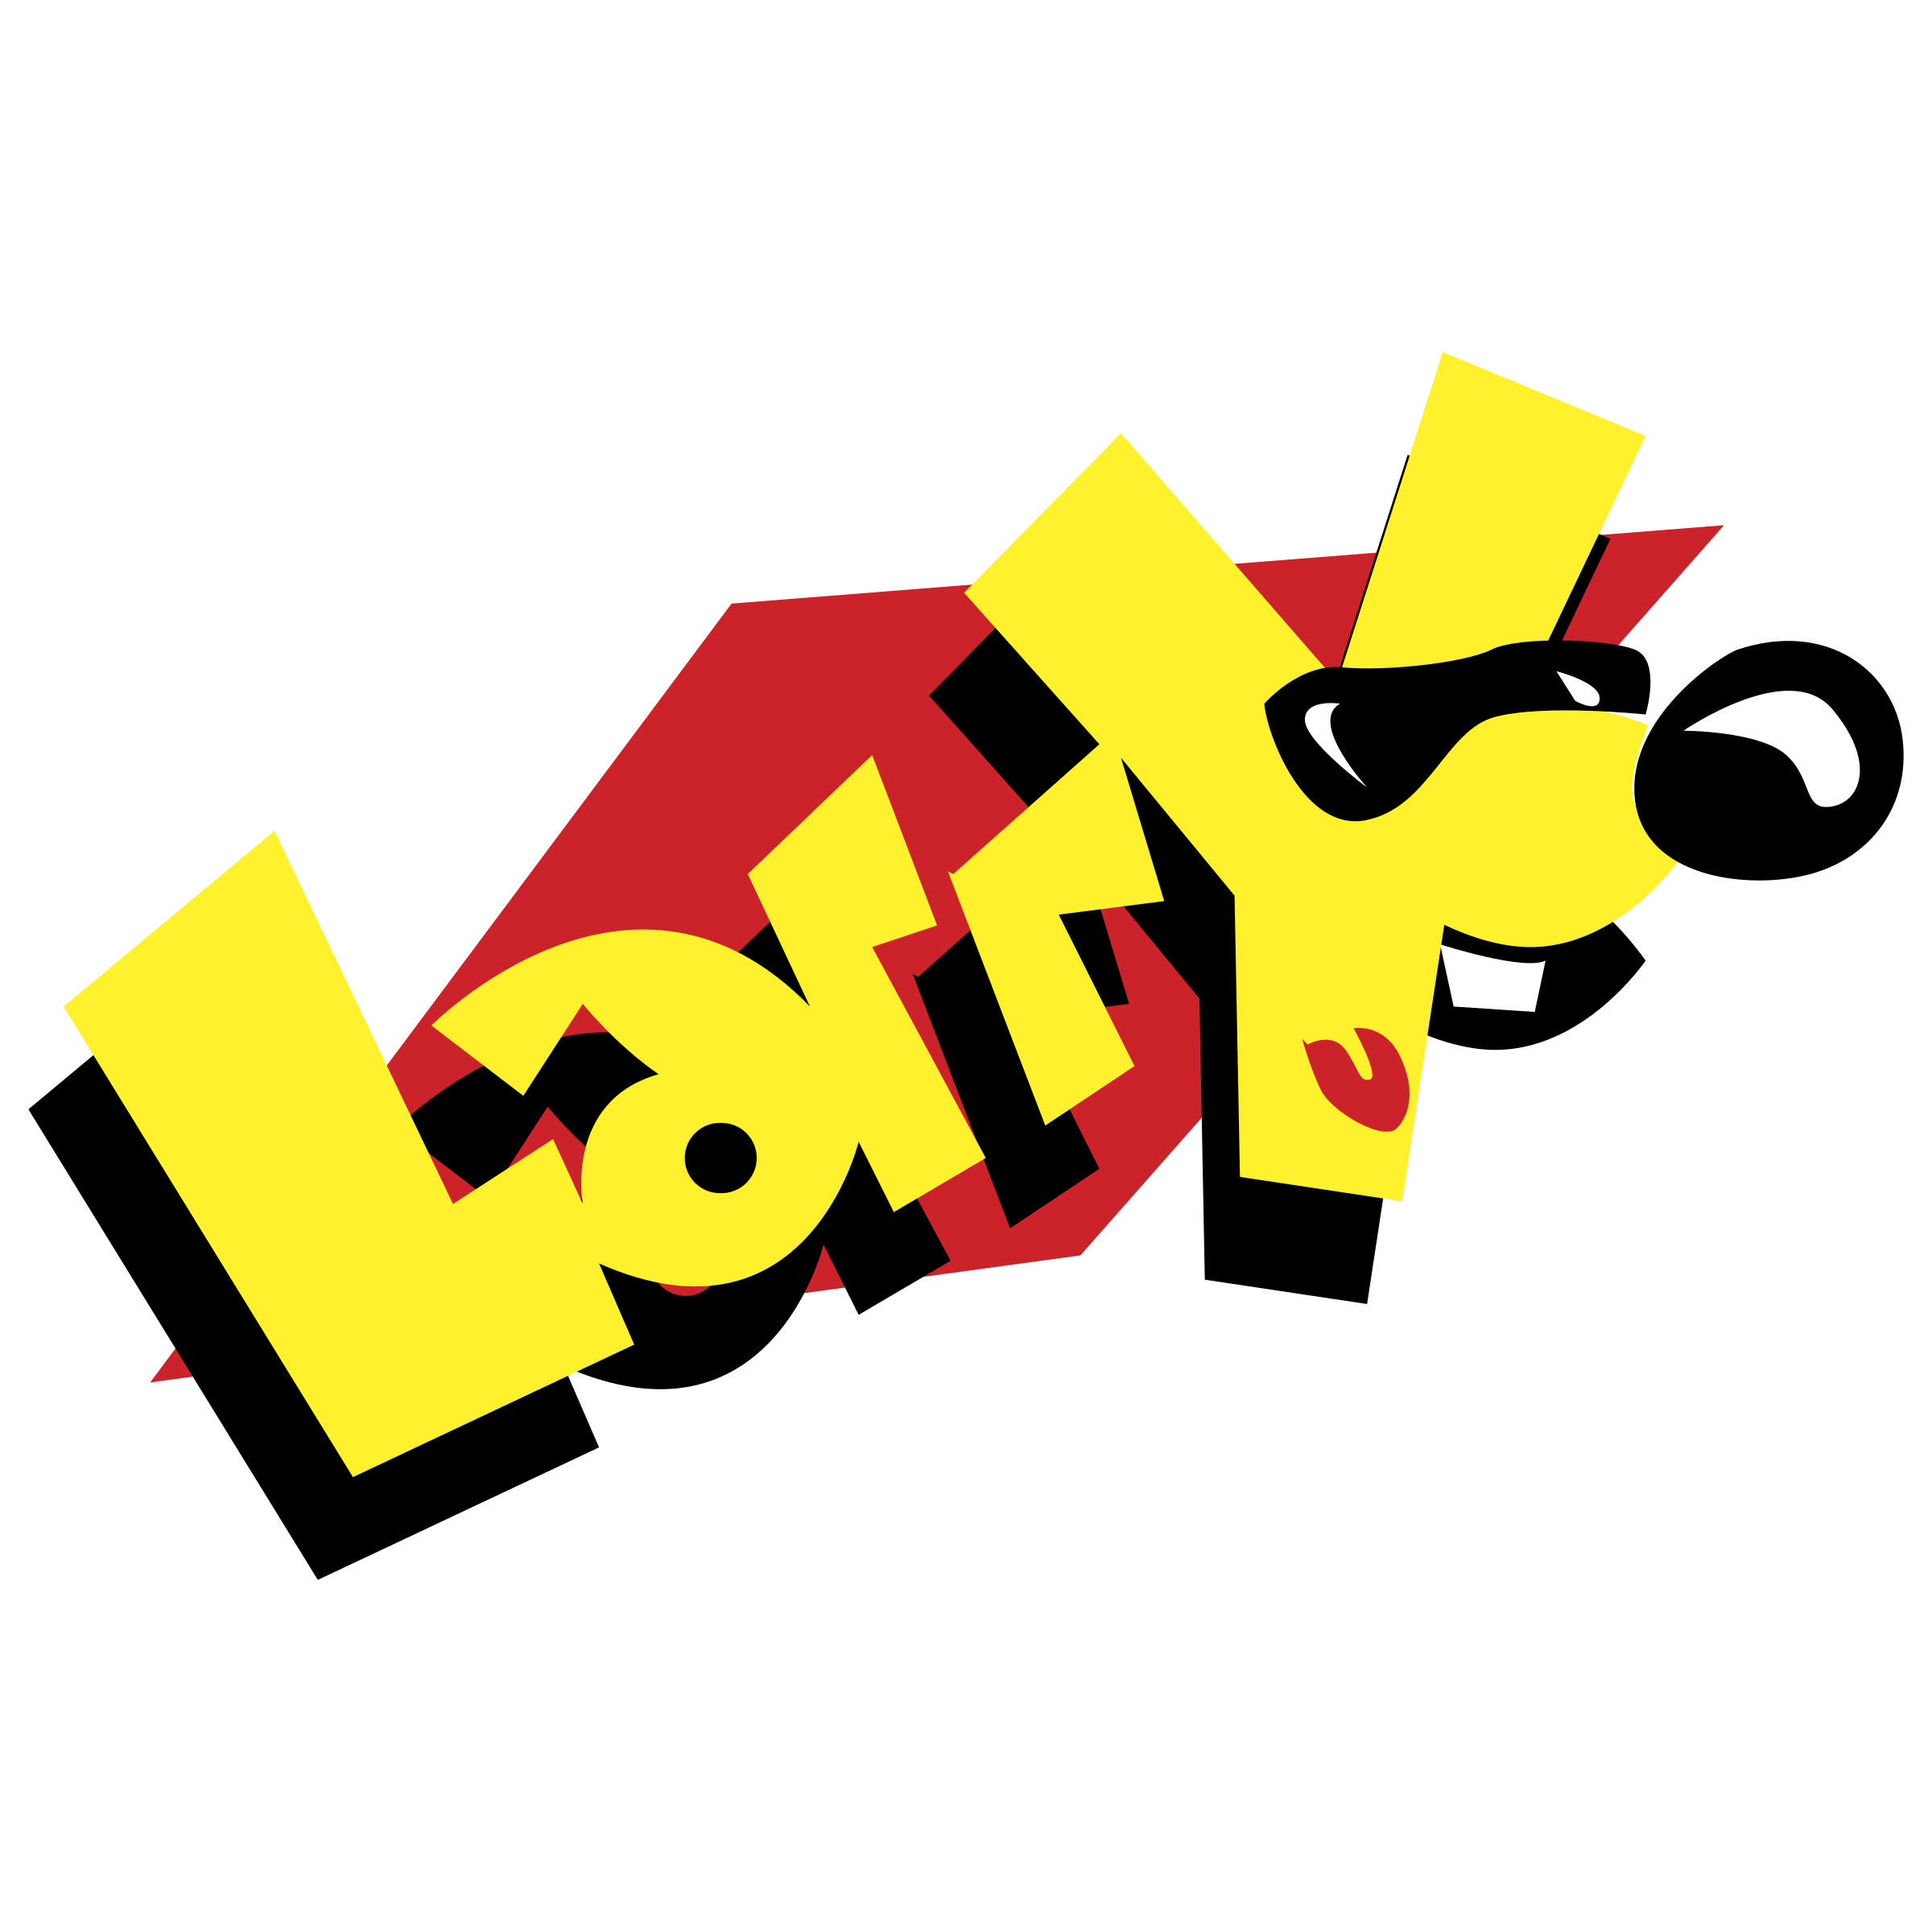 Larry Logo - Larry Records Logo PNG Transparent & SVG Vector - Freebie Supply